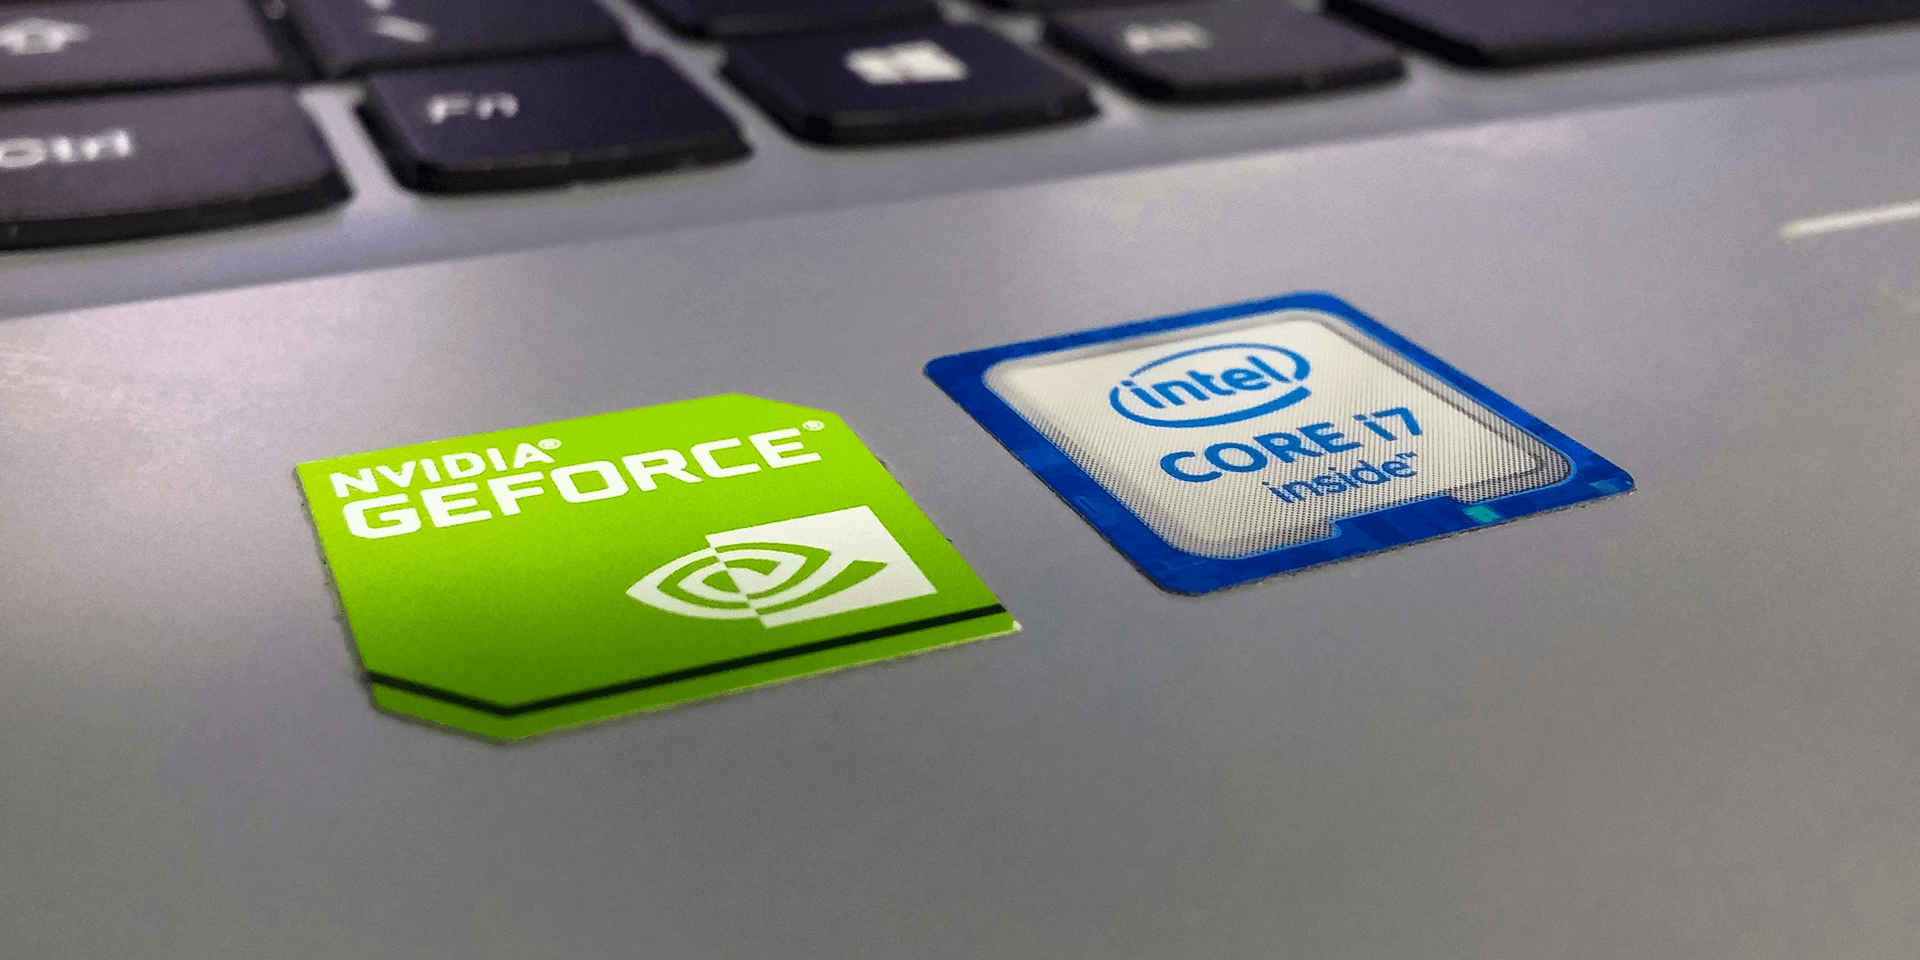 Nvidia and Intel logo on a laptop.